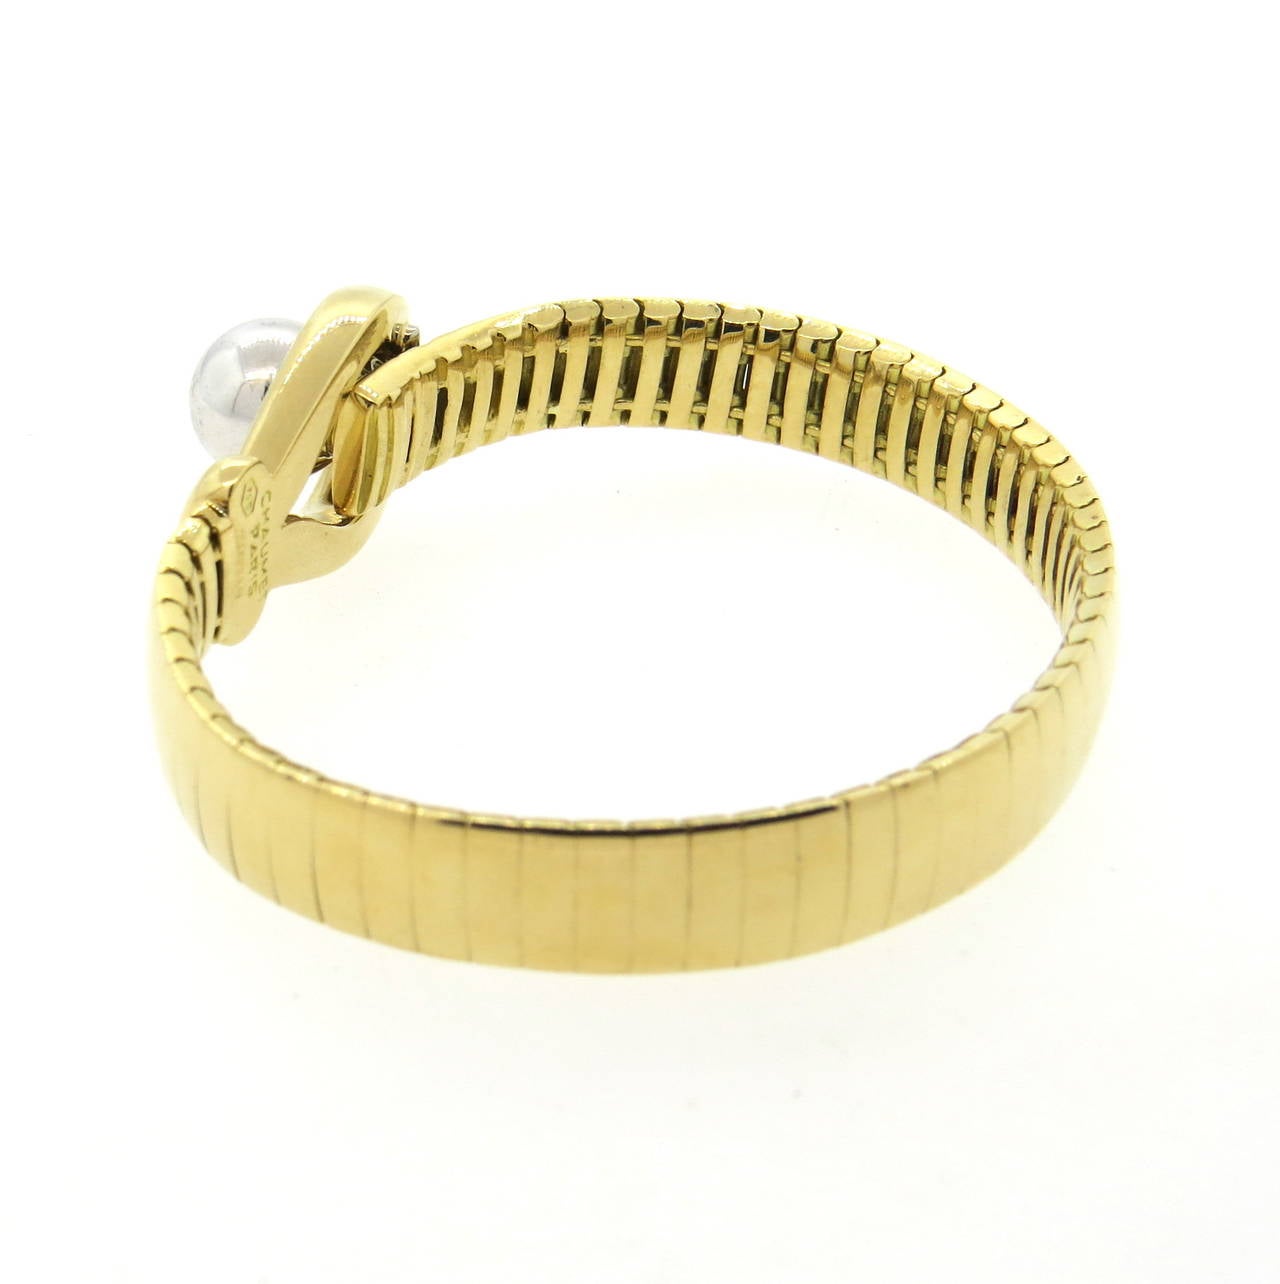 18K gold bracelet by Chaumet. Bracelet measures 7.5